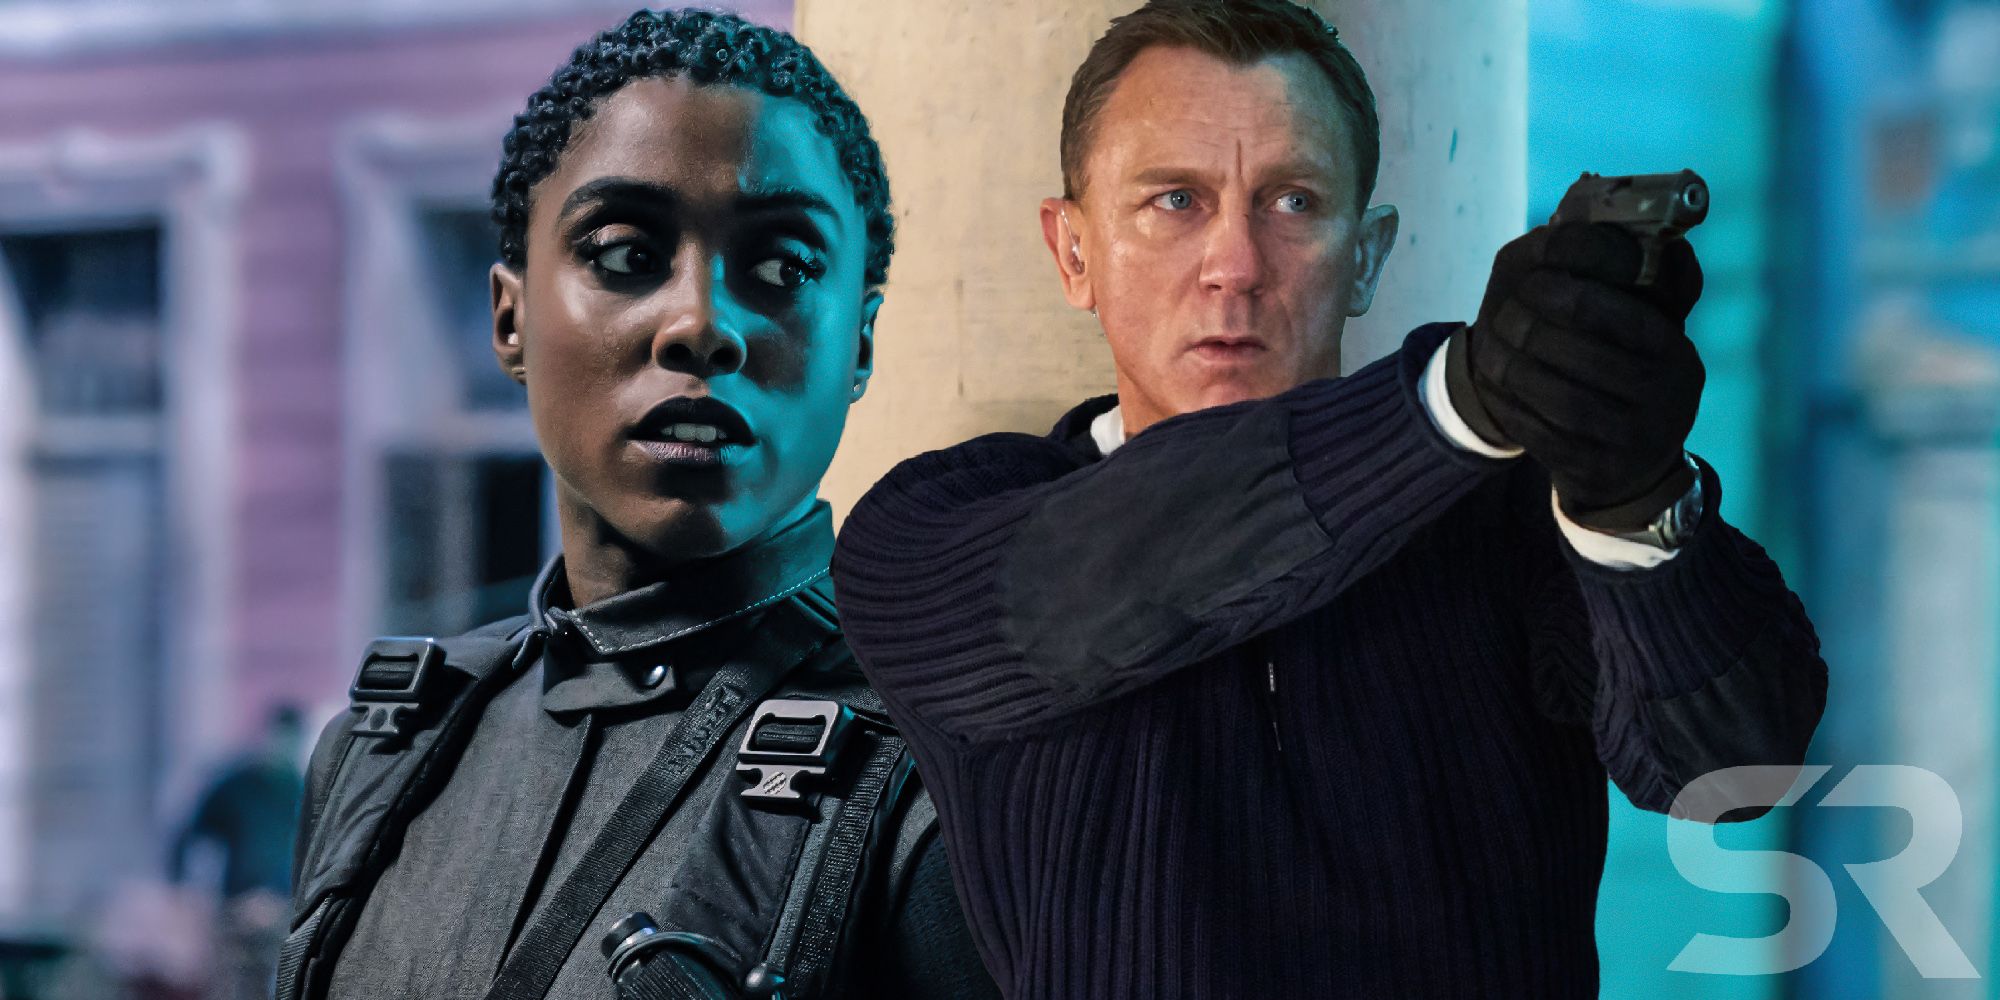 Daniel Craig’s James Bond Replacement Hasn’t Been Cast, Says Producer